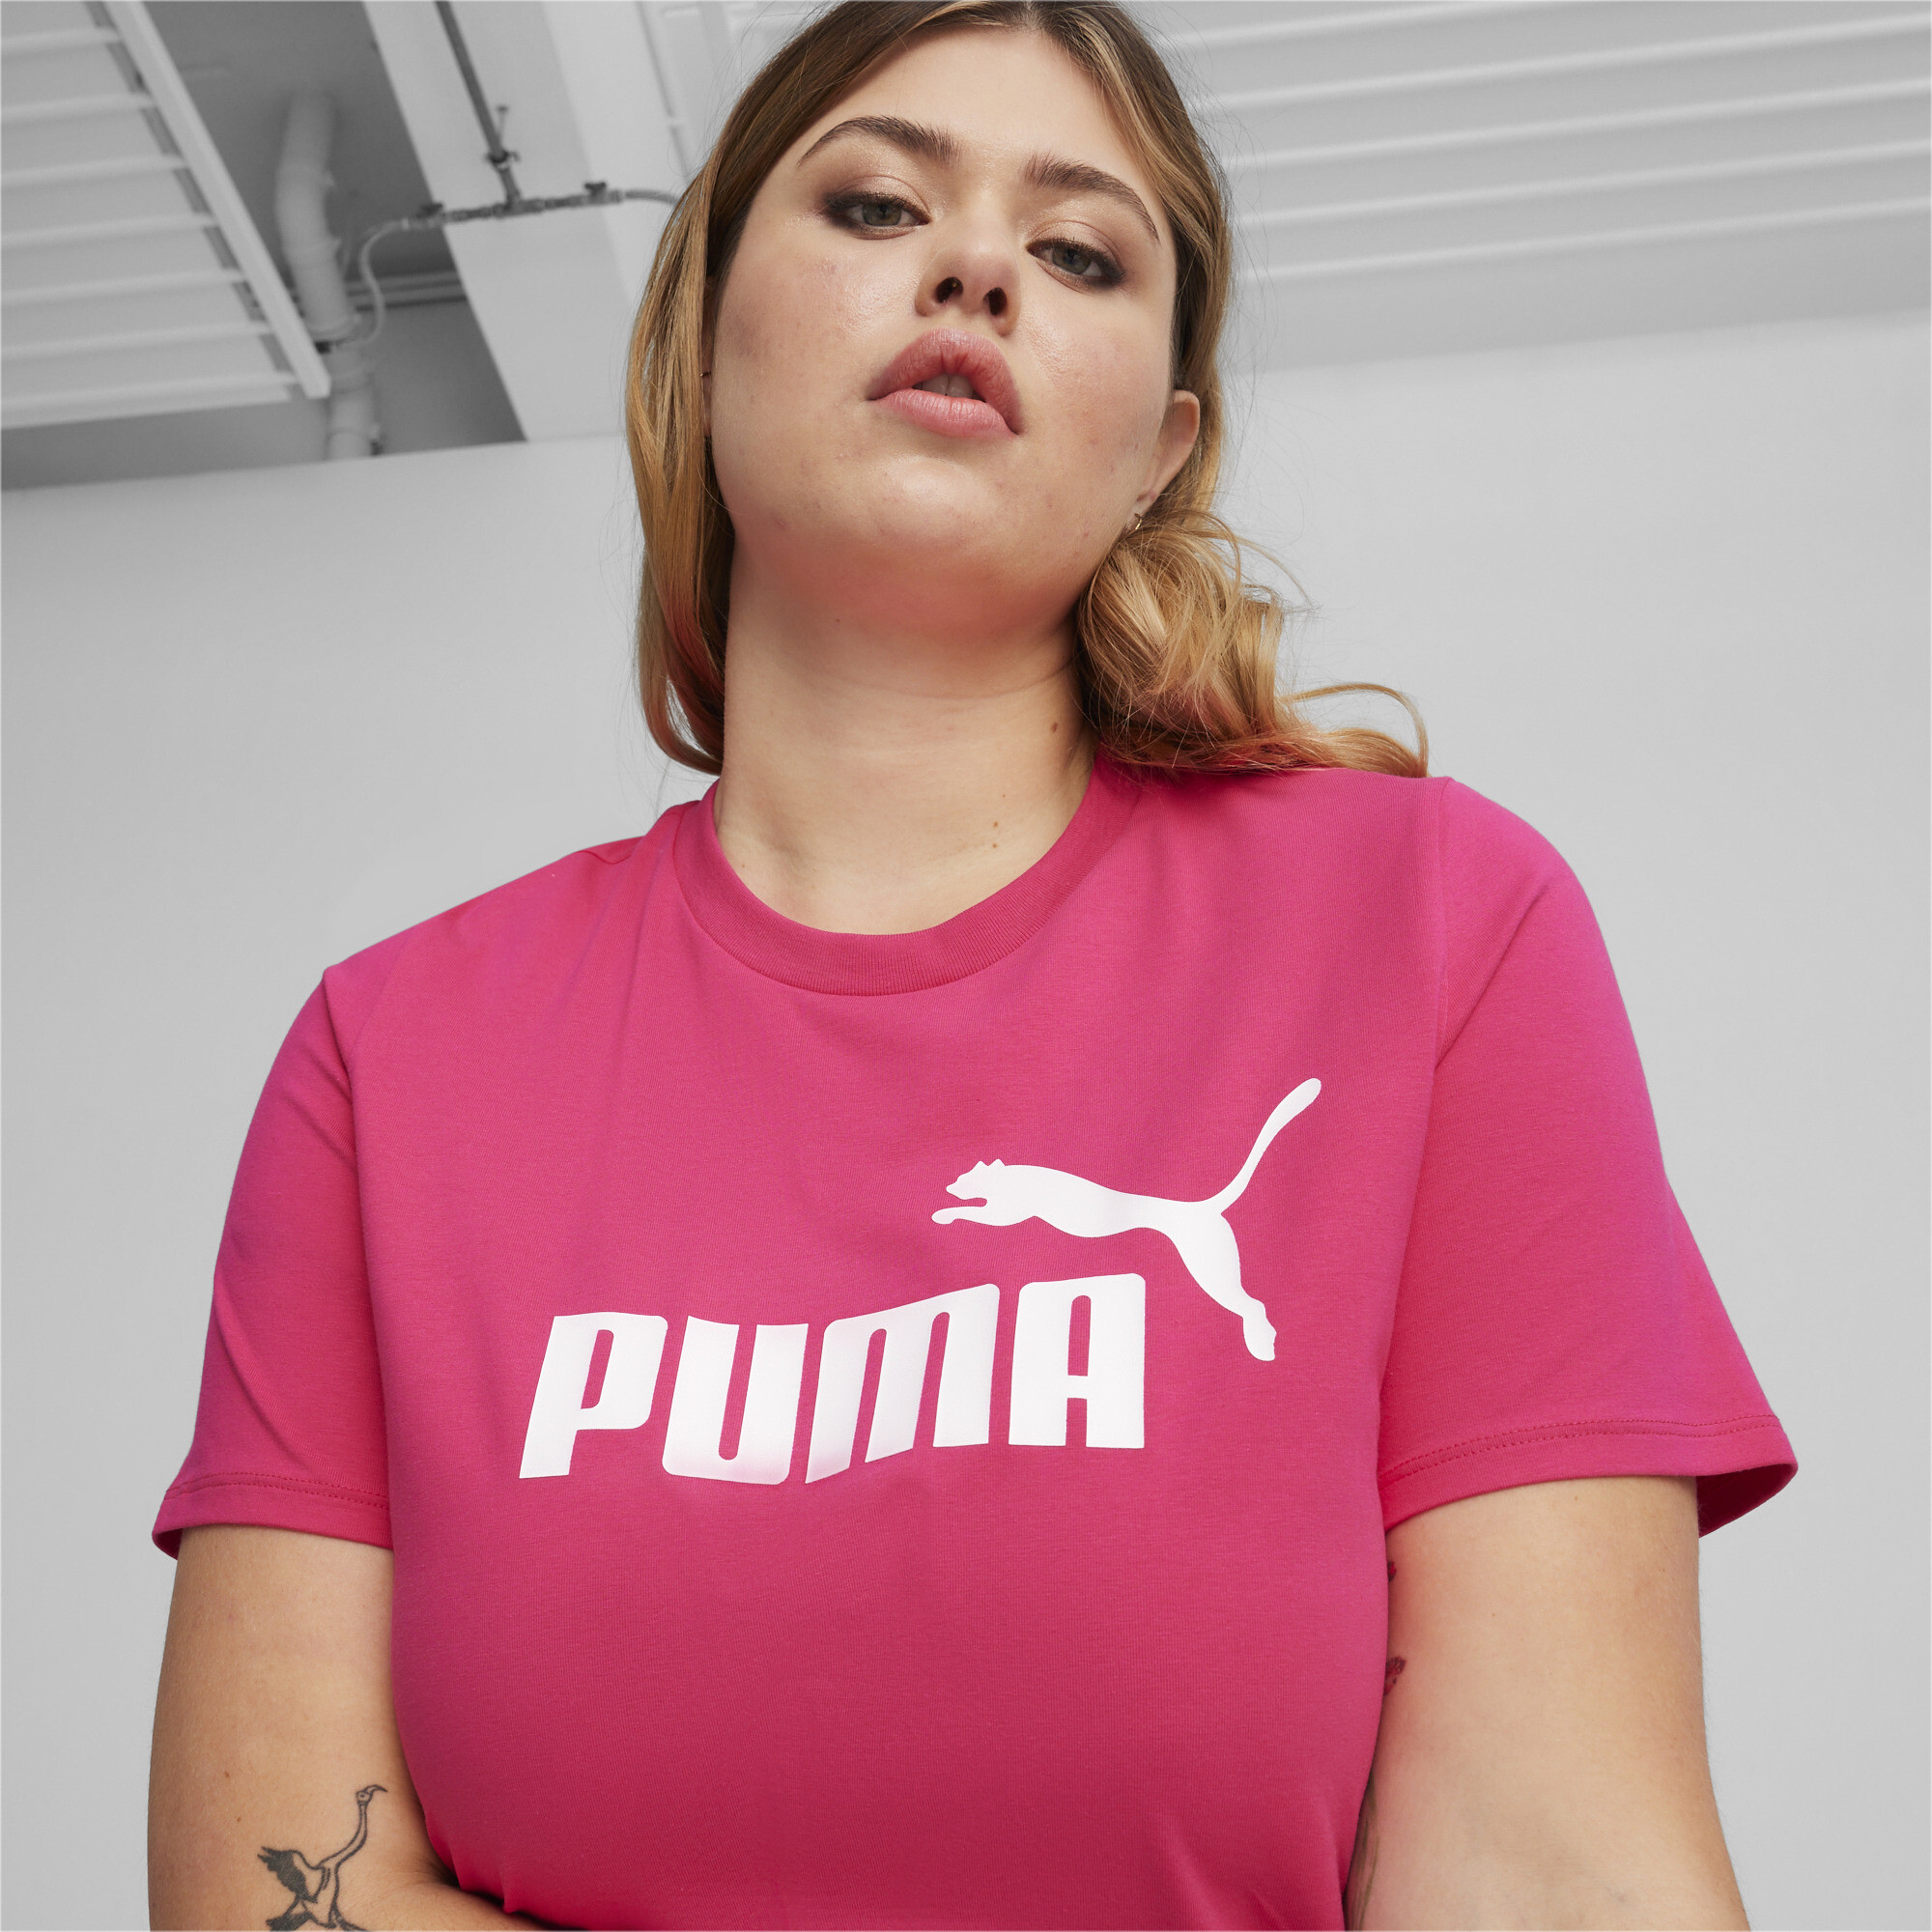 Women's Puma Essentials's Slim Tee Dress, Pink, Size S, Clothing